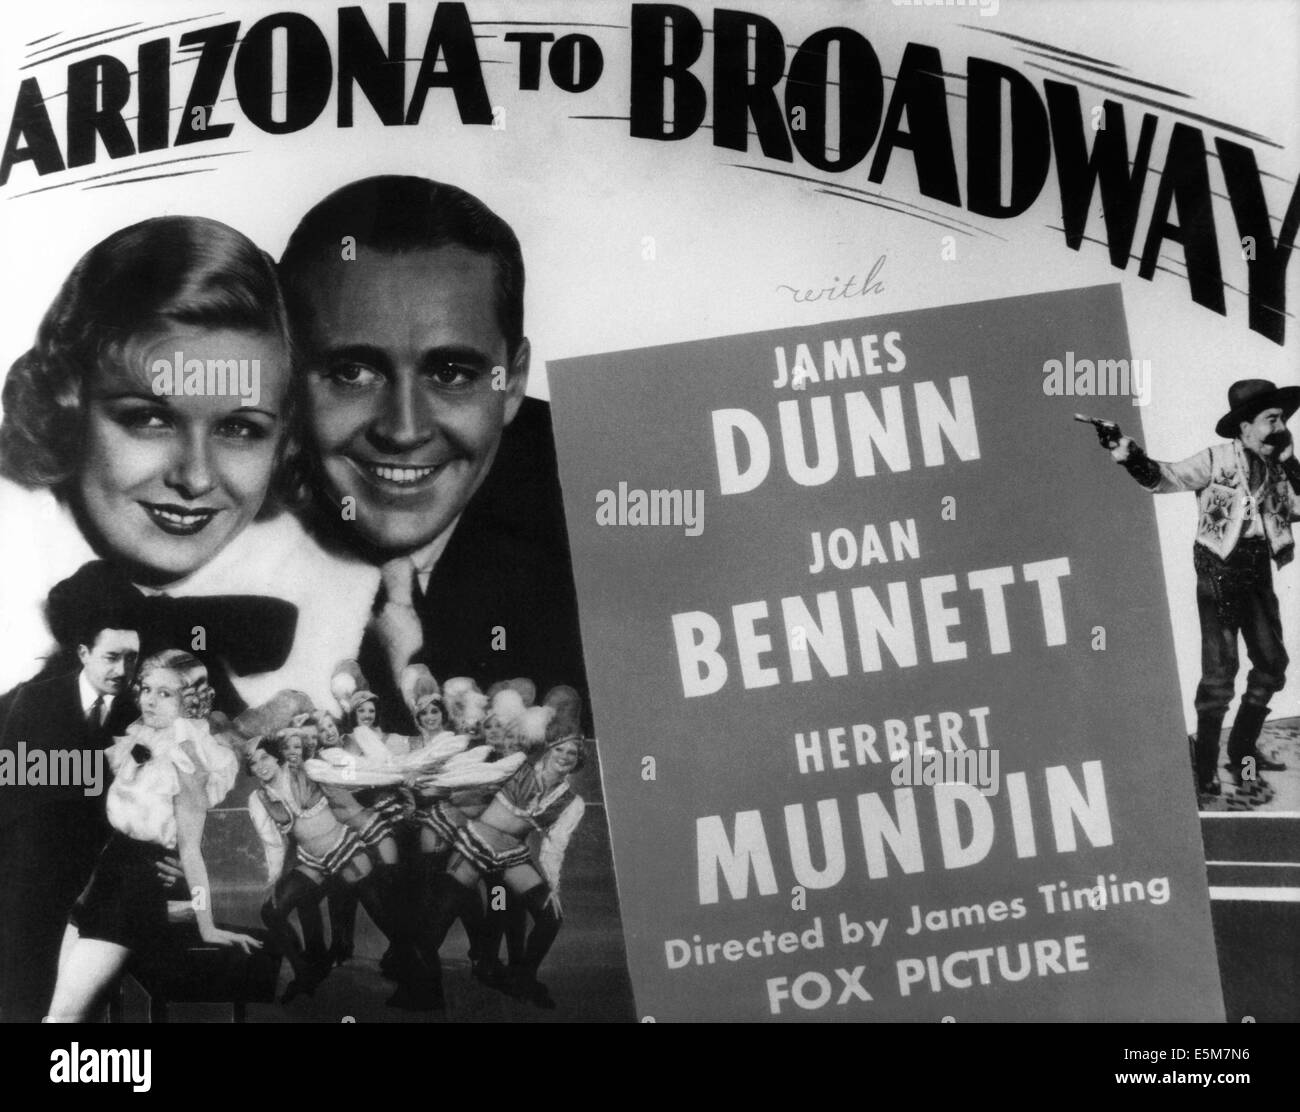 ARIZONA A BROADWAY, testa a testa da sinistra: Joan Bennett, James Dunn, Herbert Mundin (pistola), 1933, TM & Copyright © xx Foto Stock